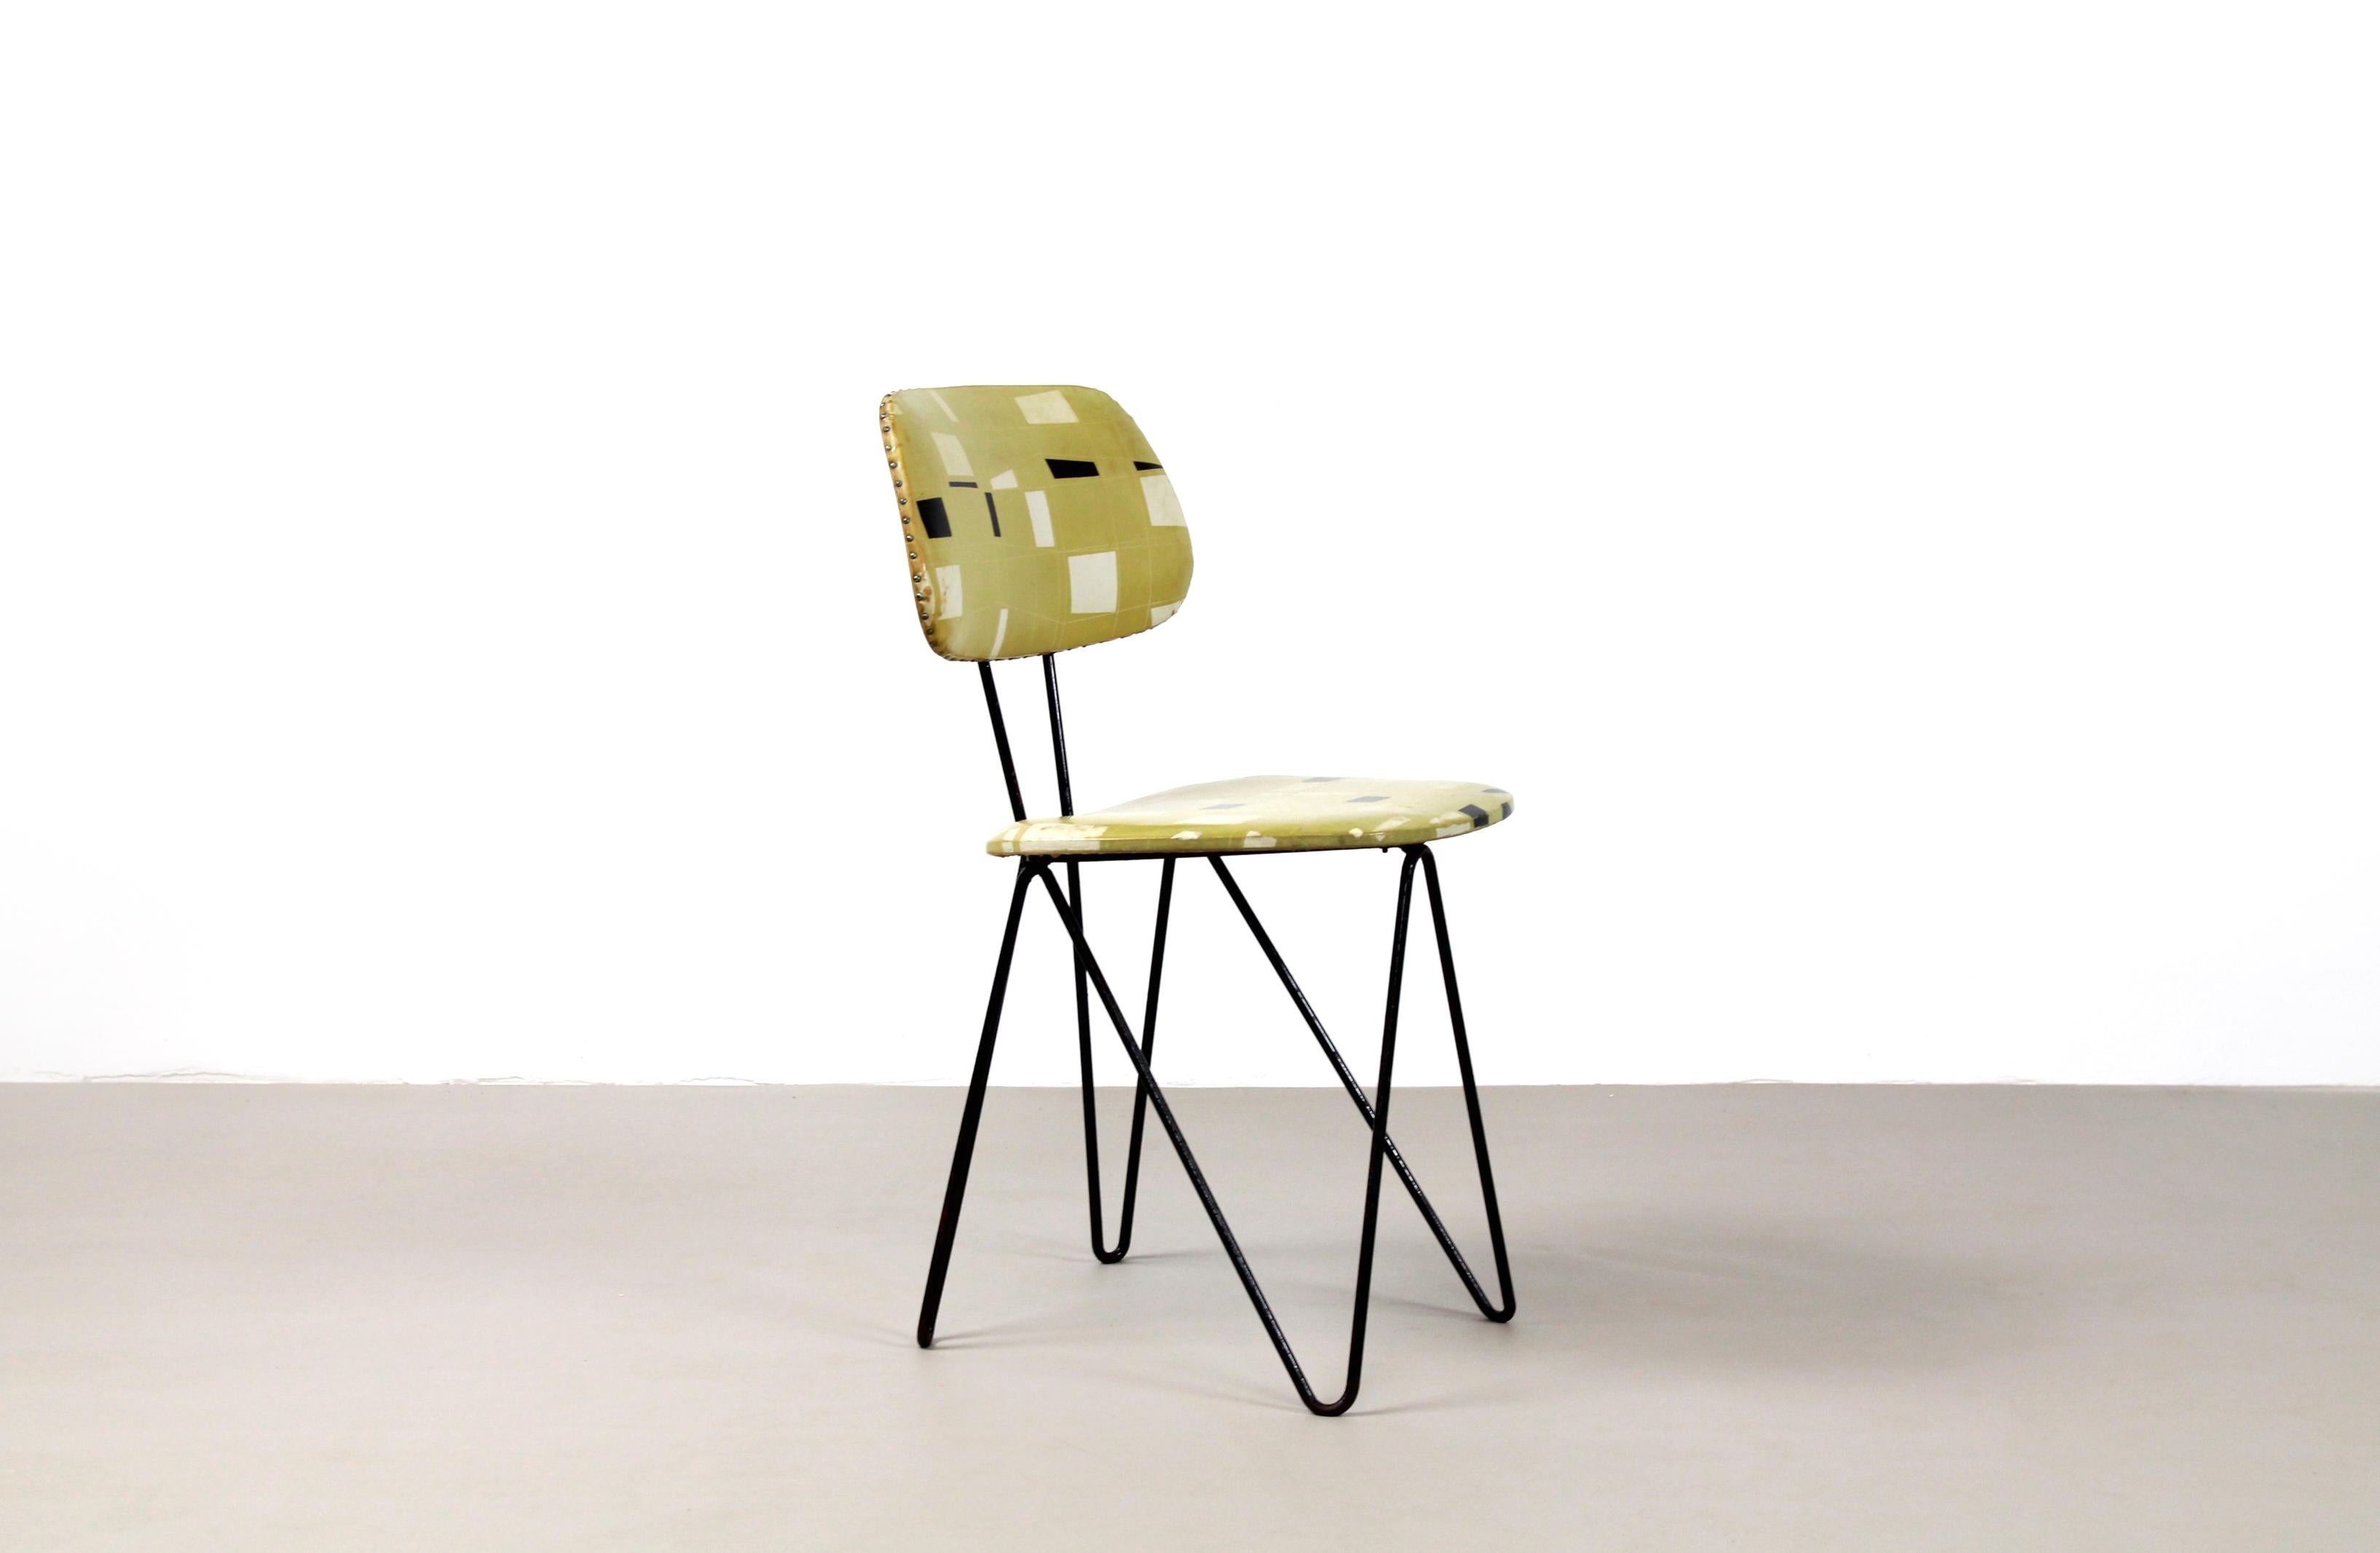 Mid-Century Modern Chaise minimaliste néerlandaise SM01 originale Pastoe de Cees Braakman, 1954 en vente